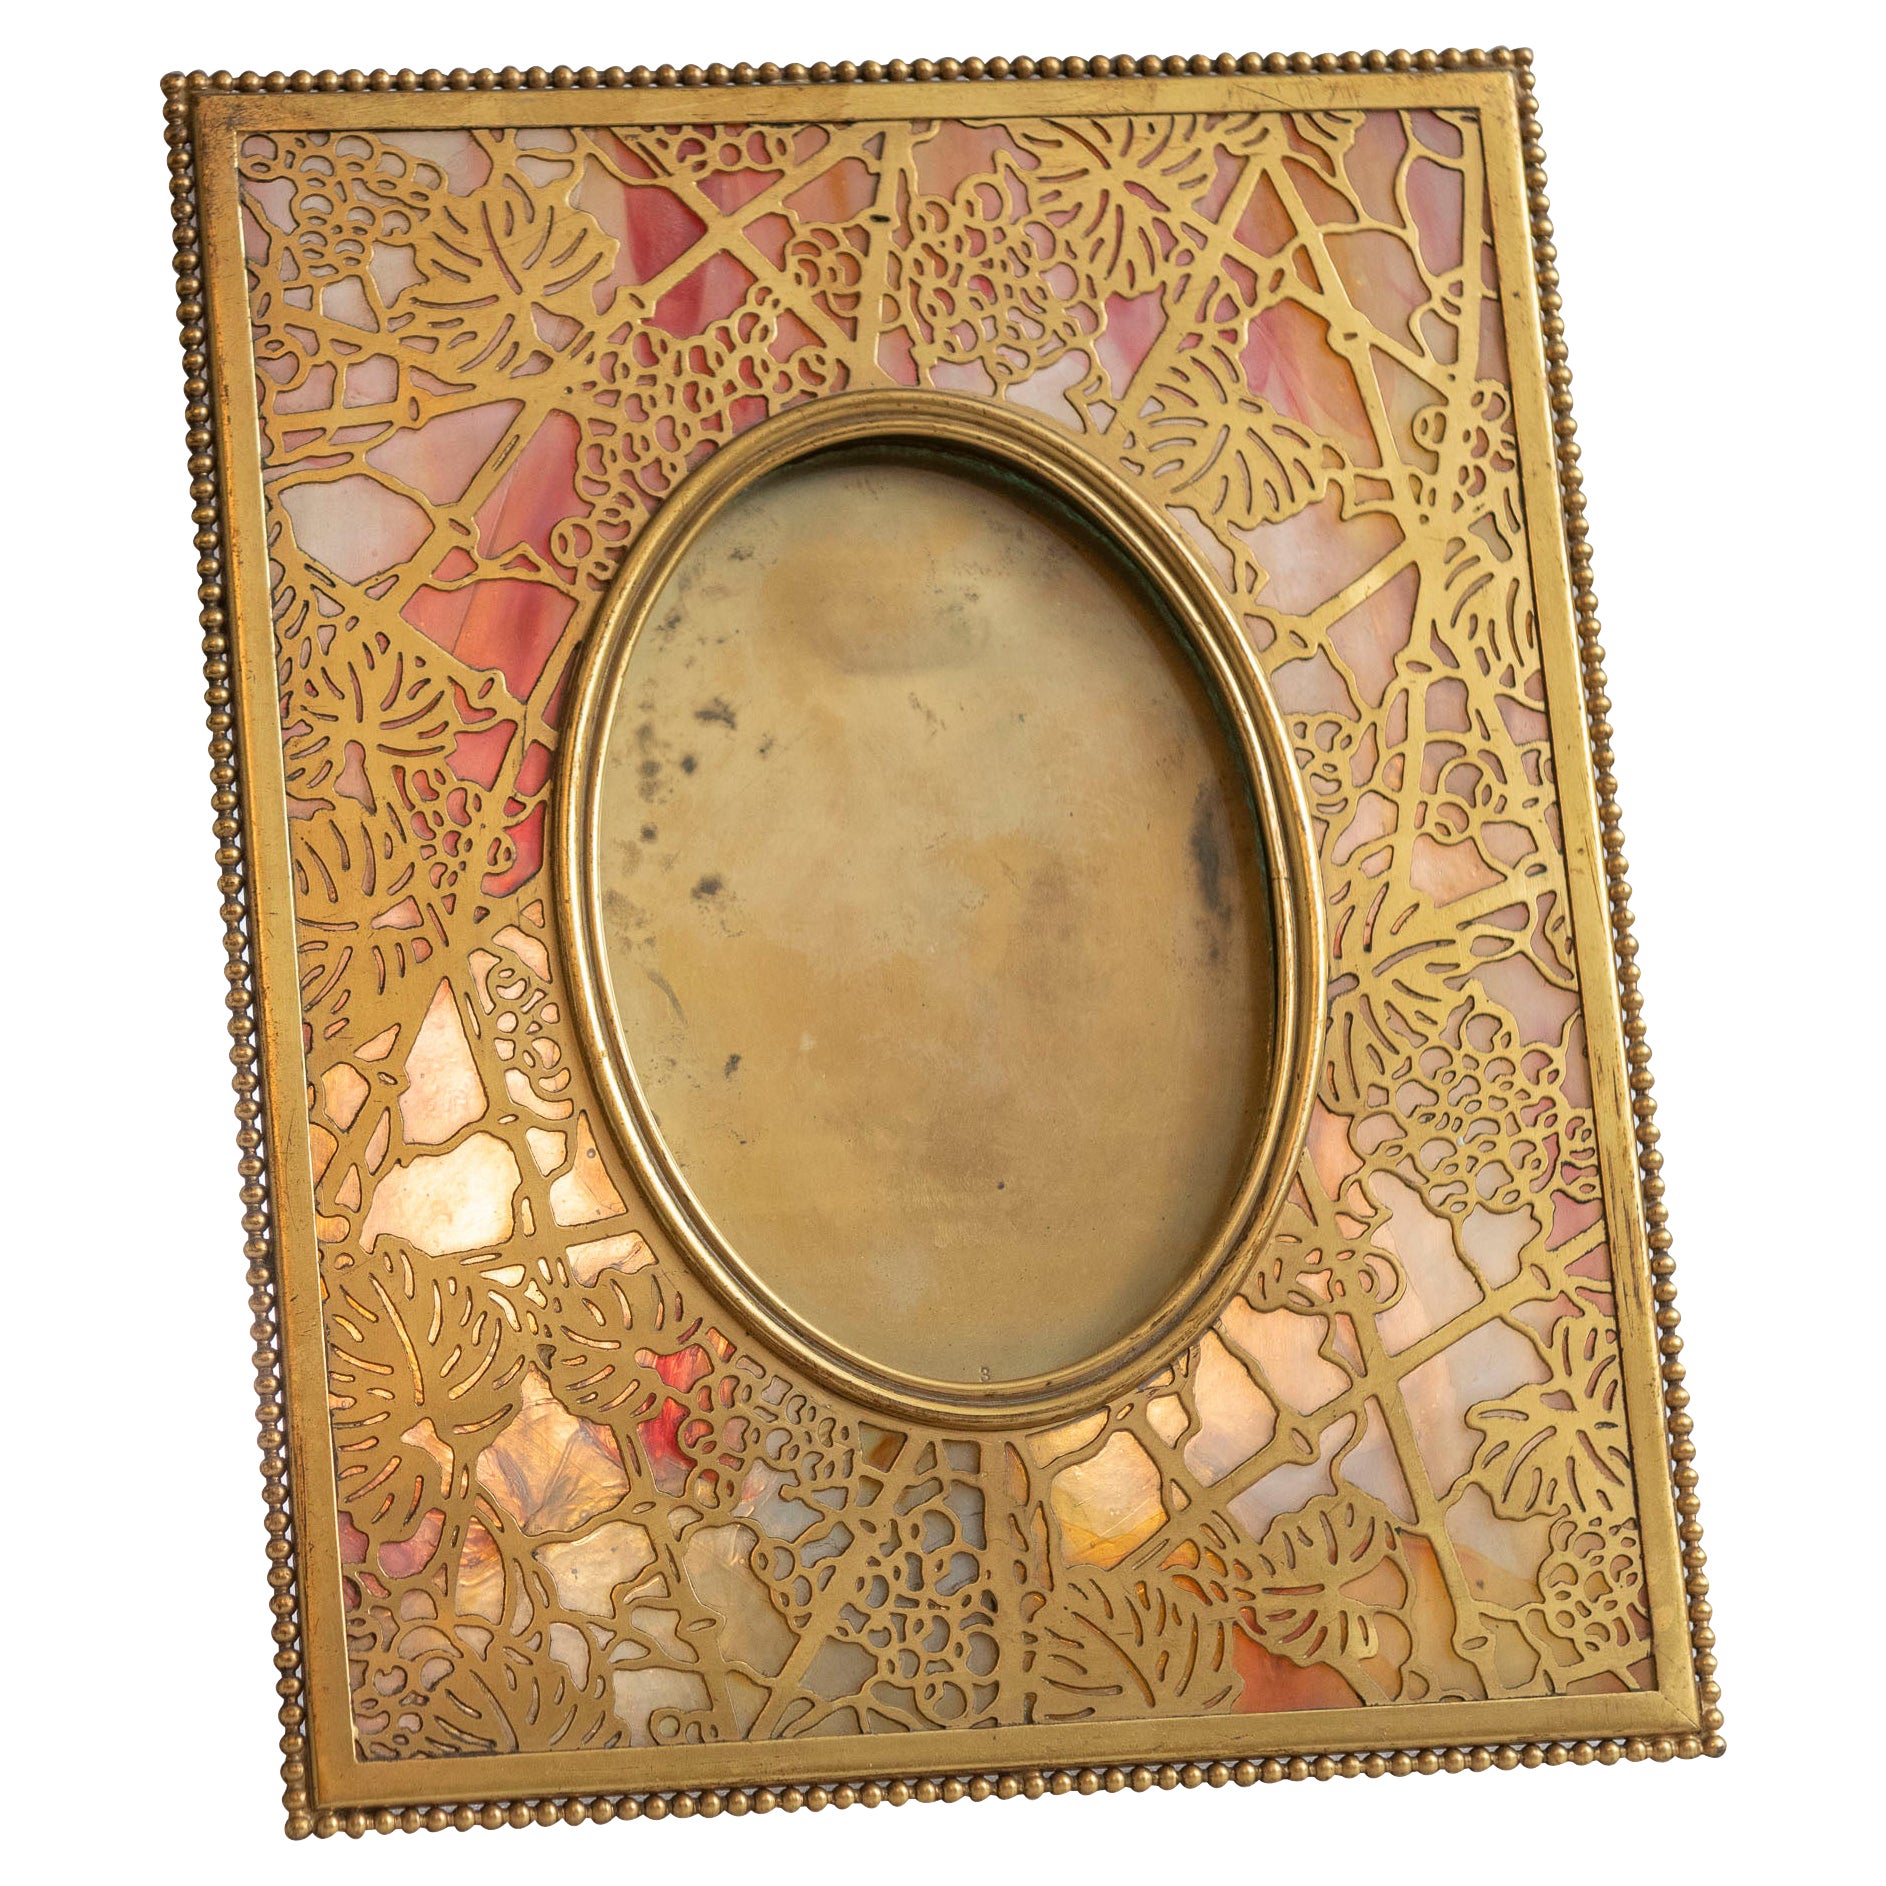 Original Signed Tiffany Studios Picture Frame, Grapevine Pattern, ca. 1905